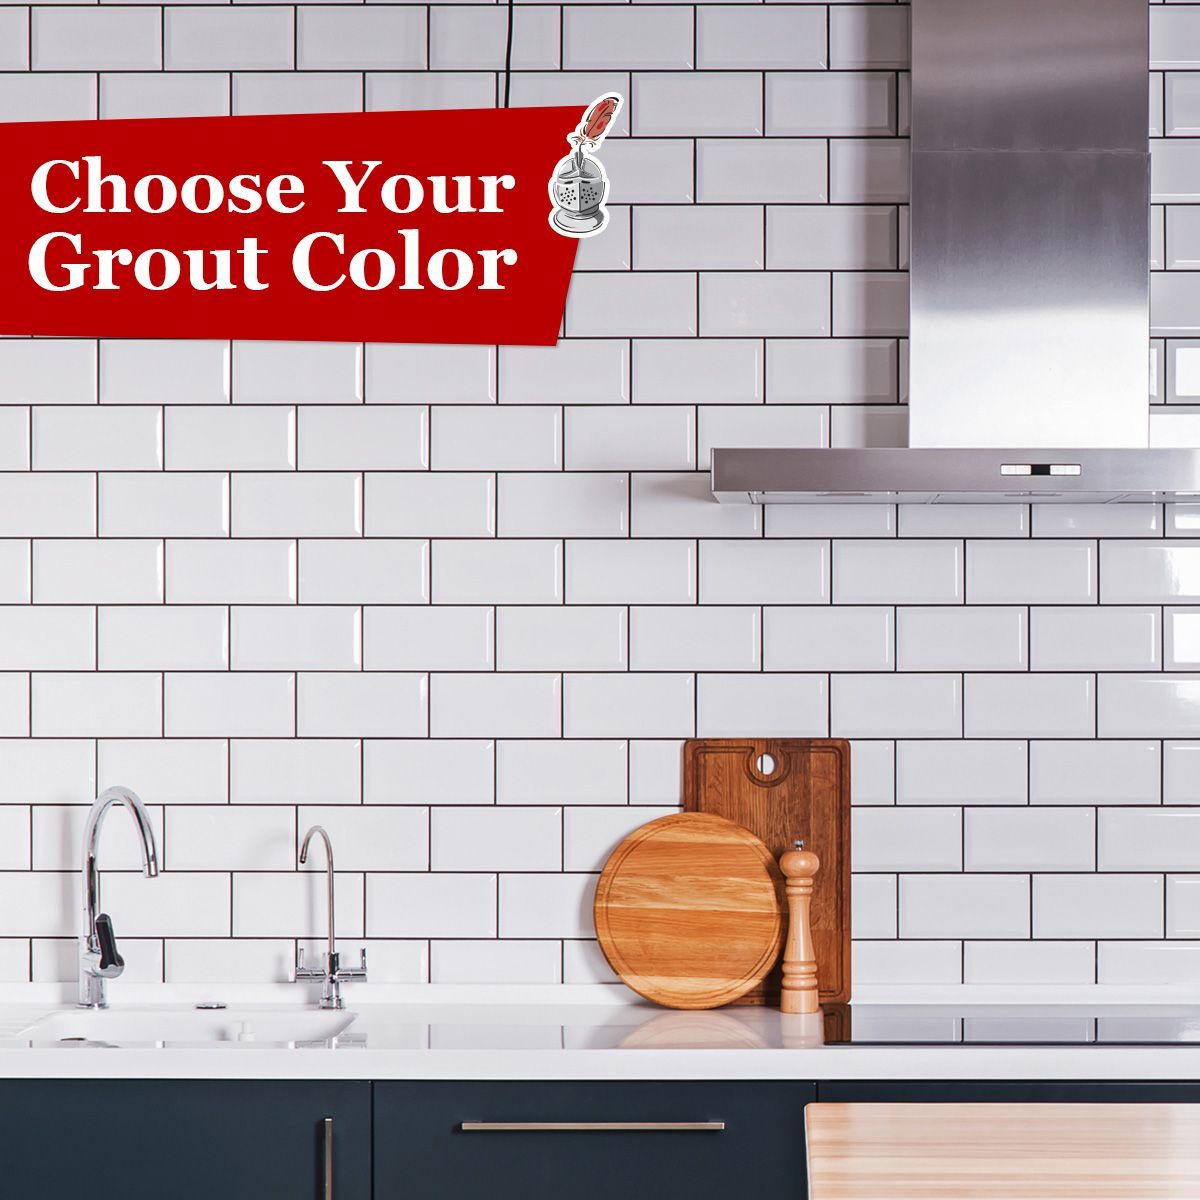 Choose Your Grout Color